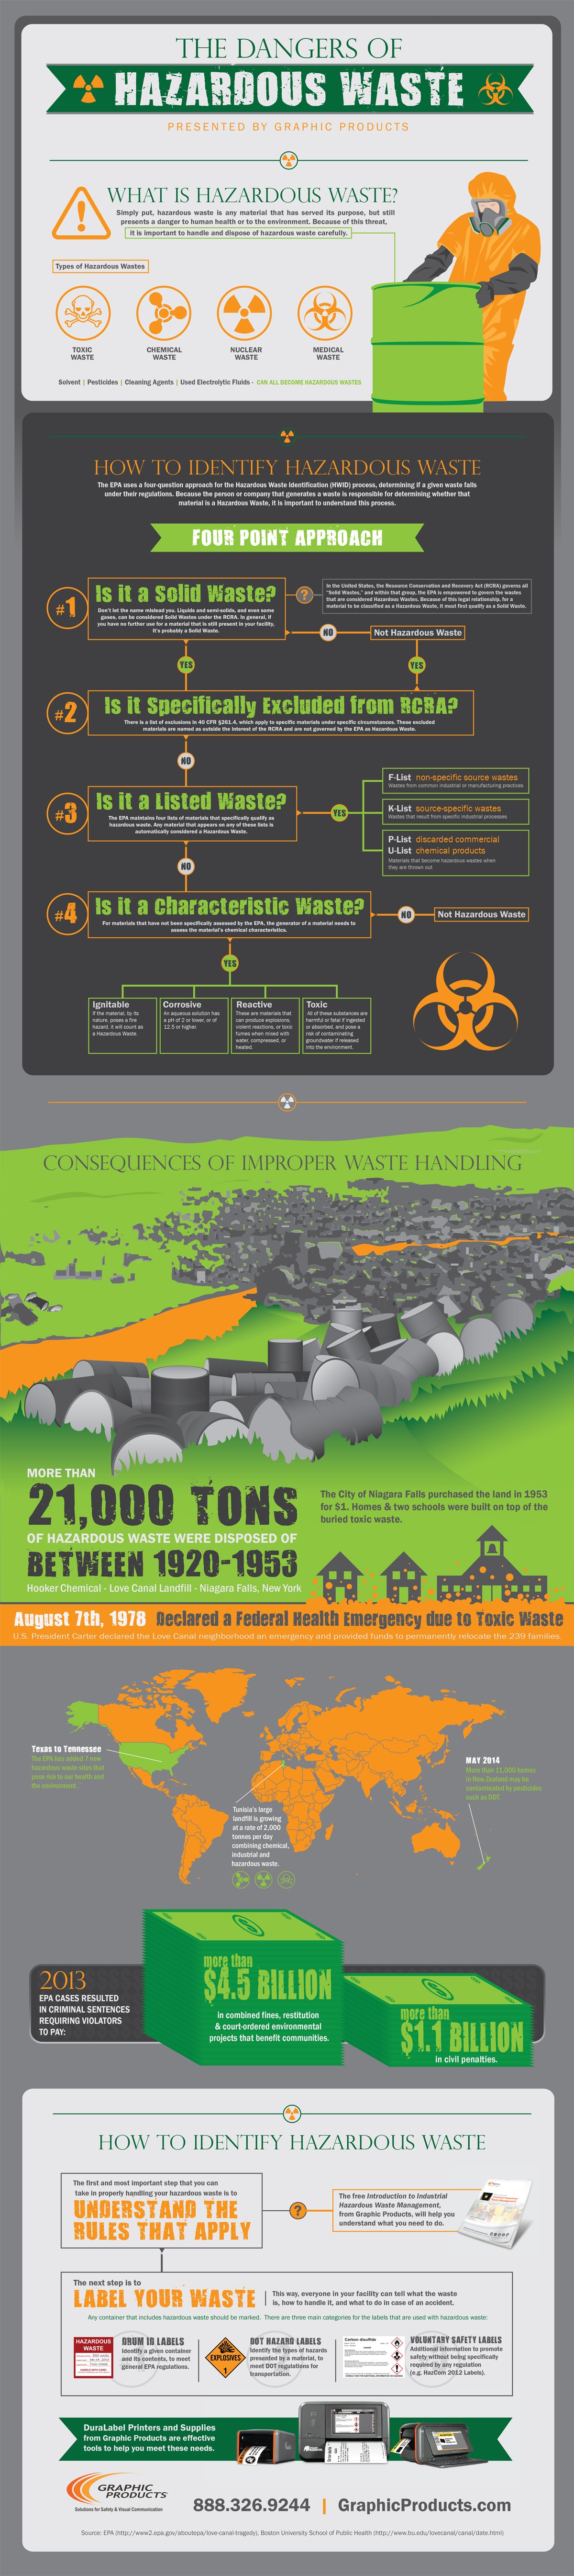 DuraLabel infographic toxic waste hazardous materials 